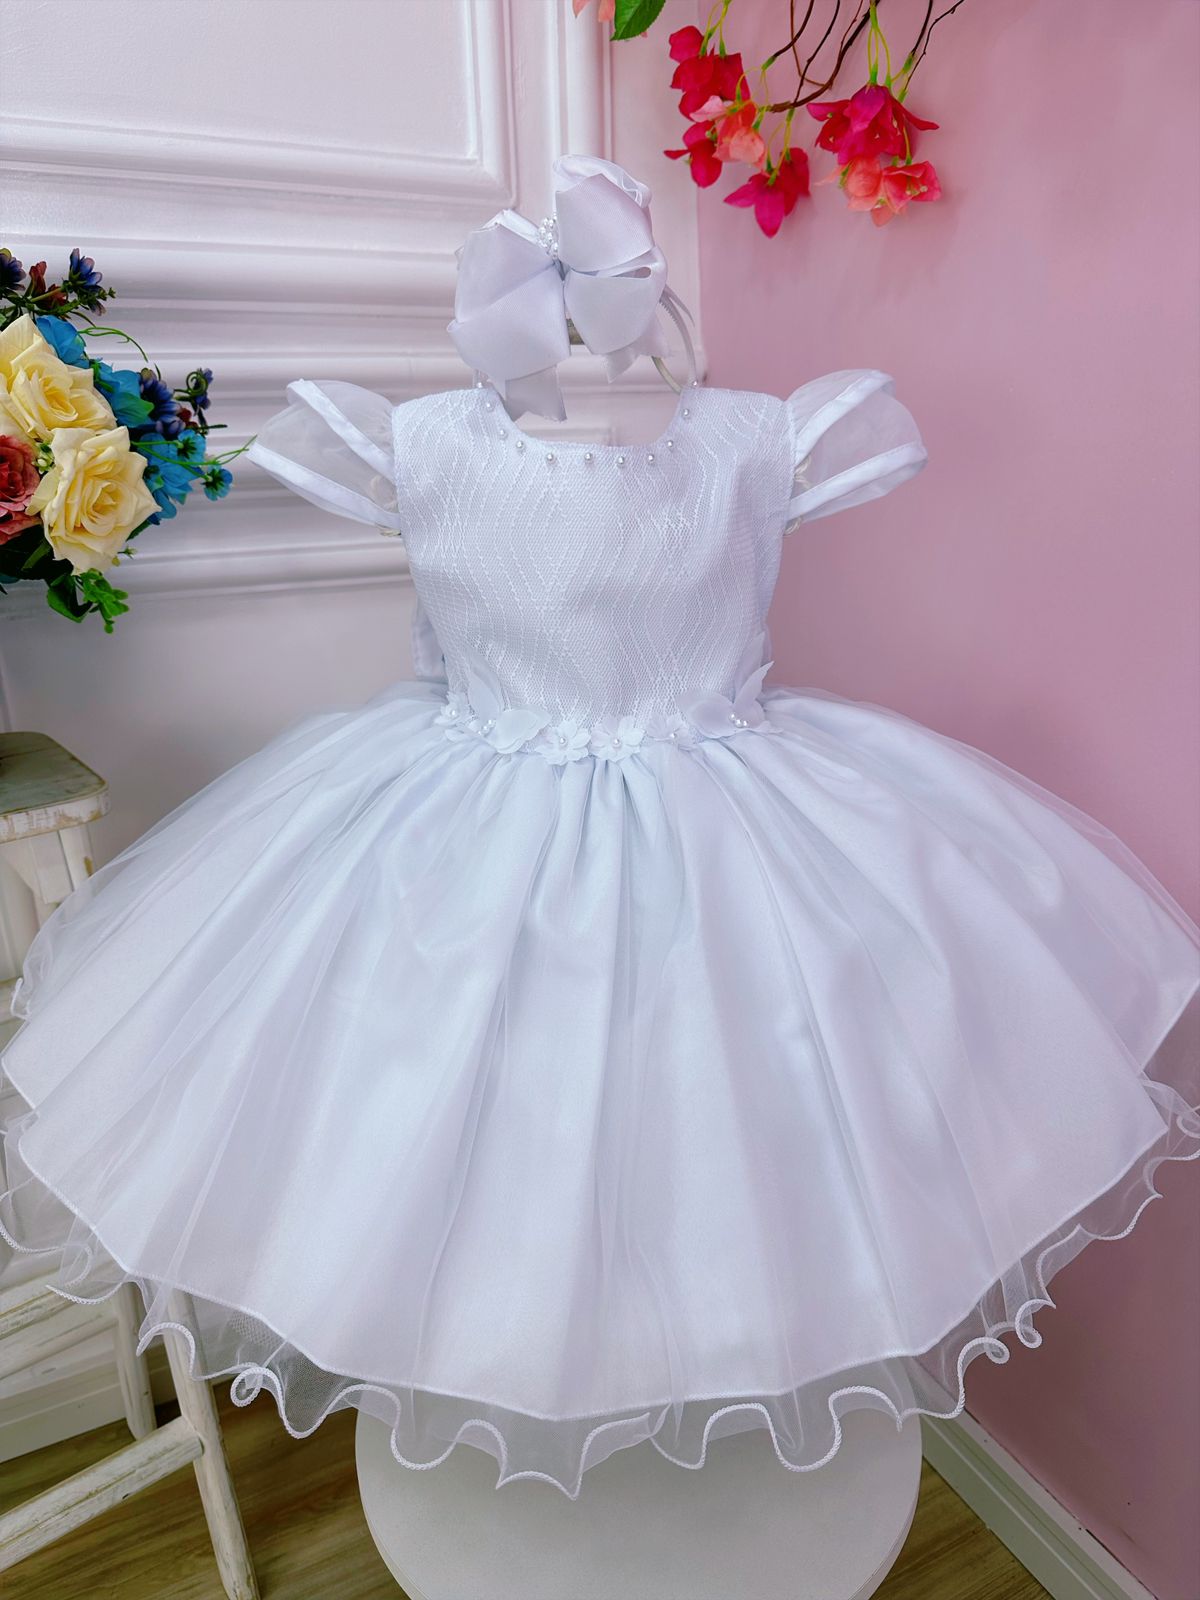 Vestido Infantil Branco C/ Aplique Flores Borboletas e Renda